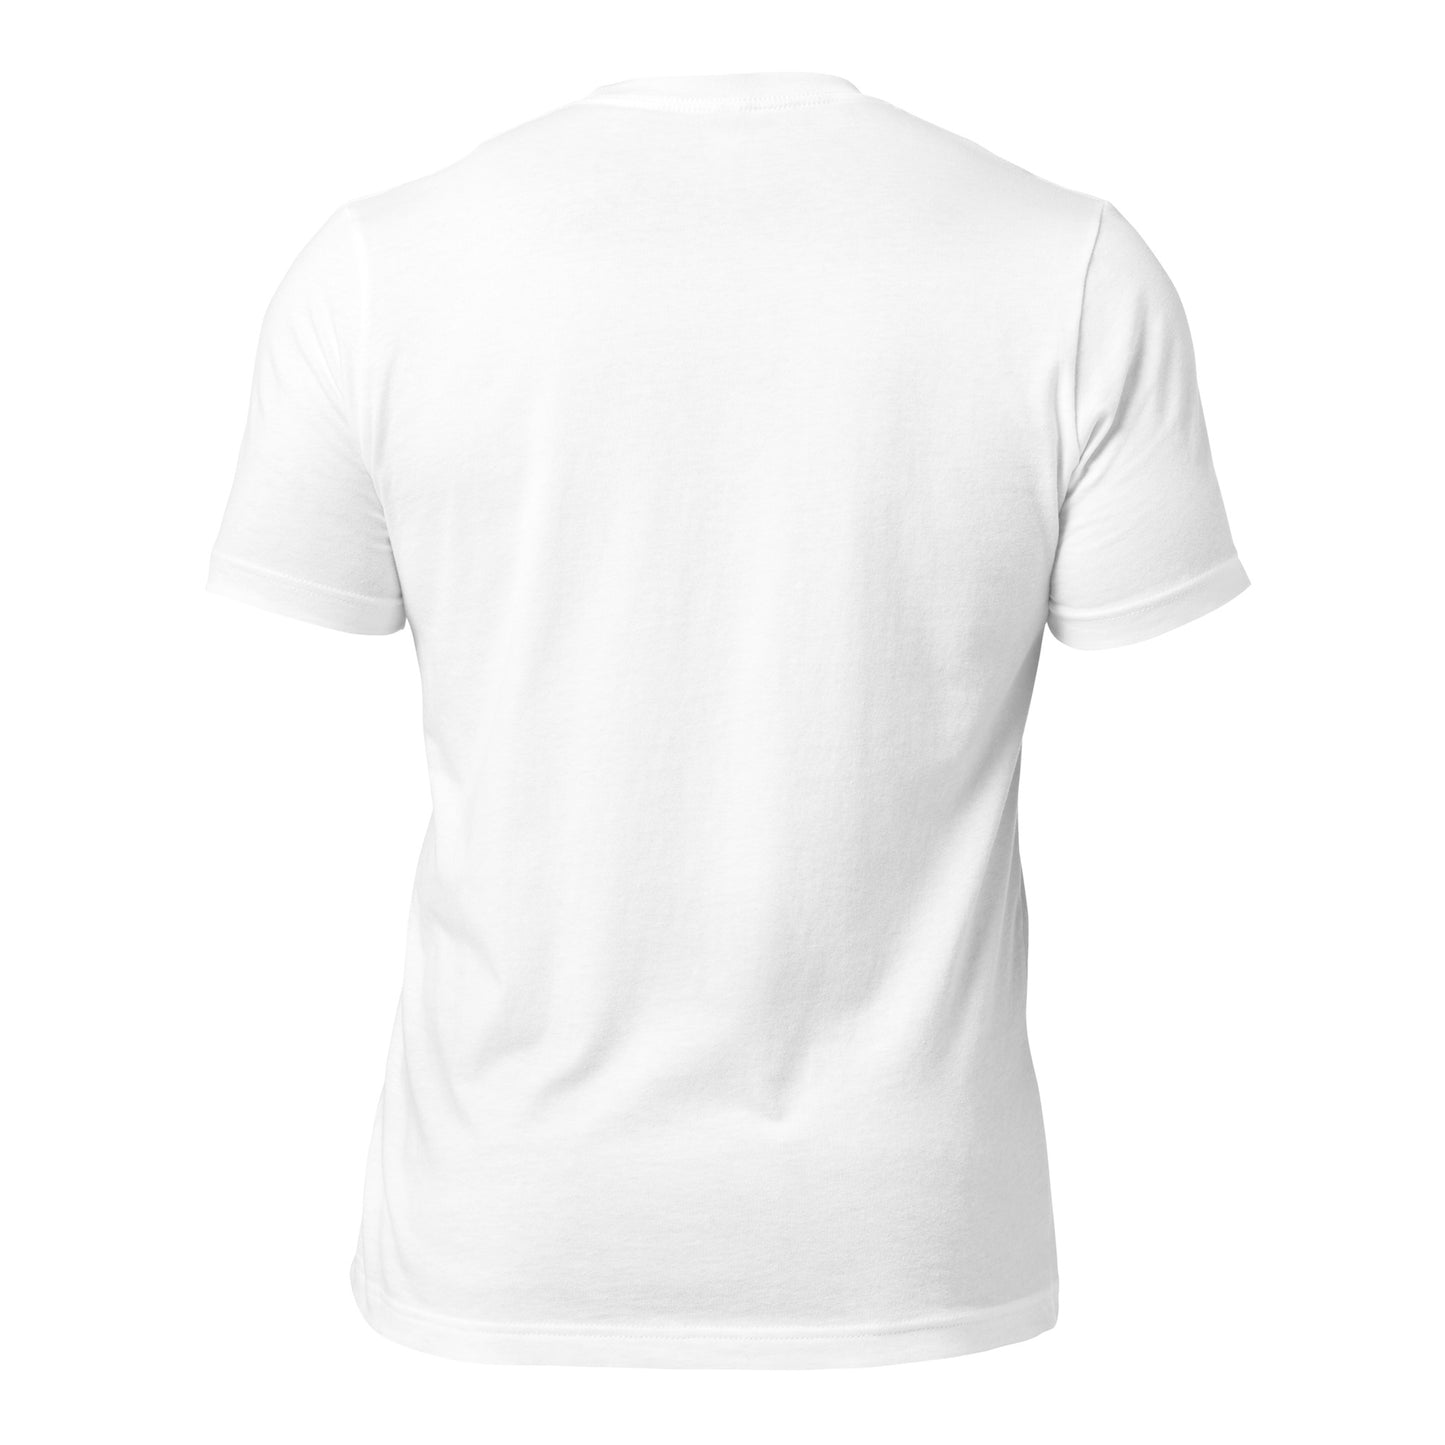 martialbase T-Shirt | Symbols_0001